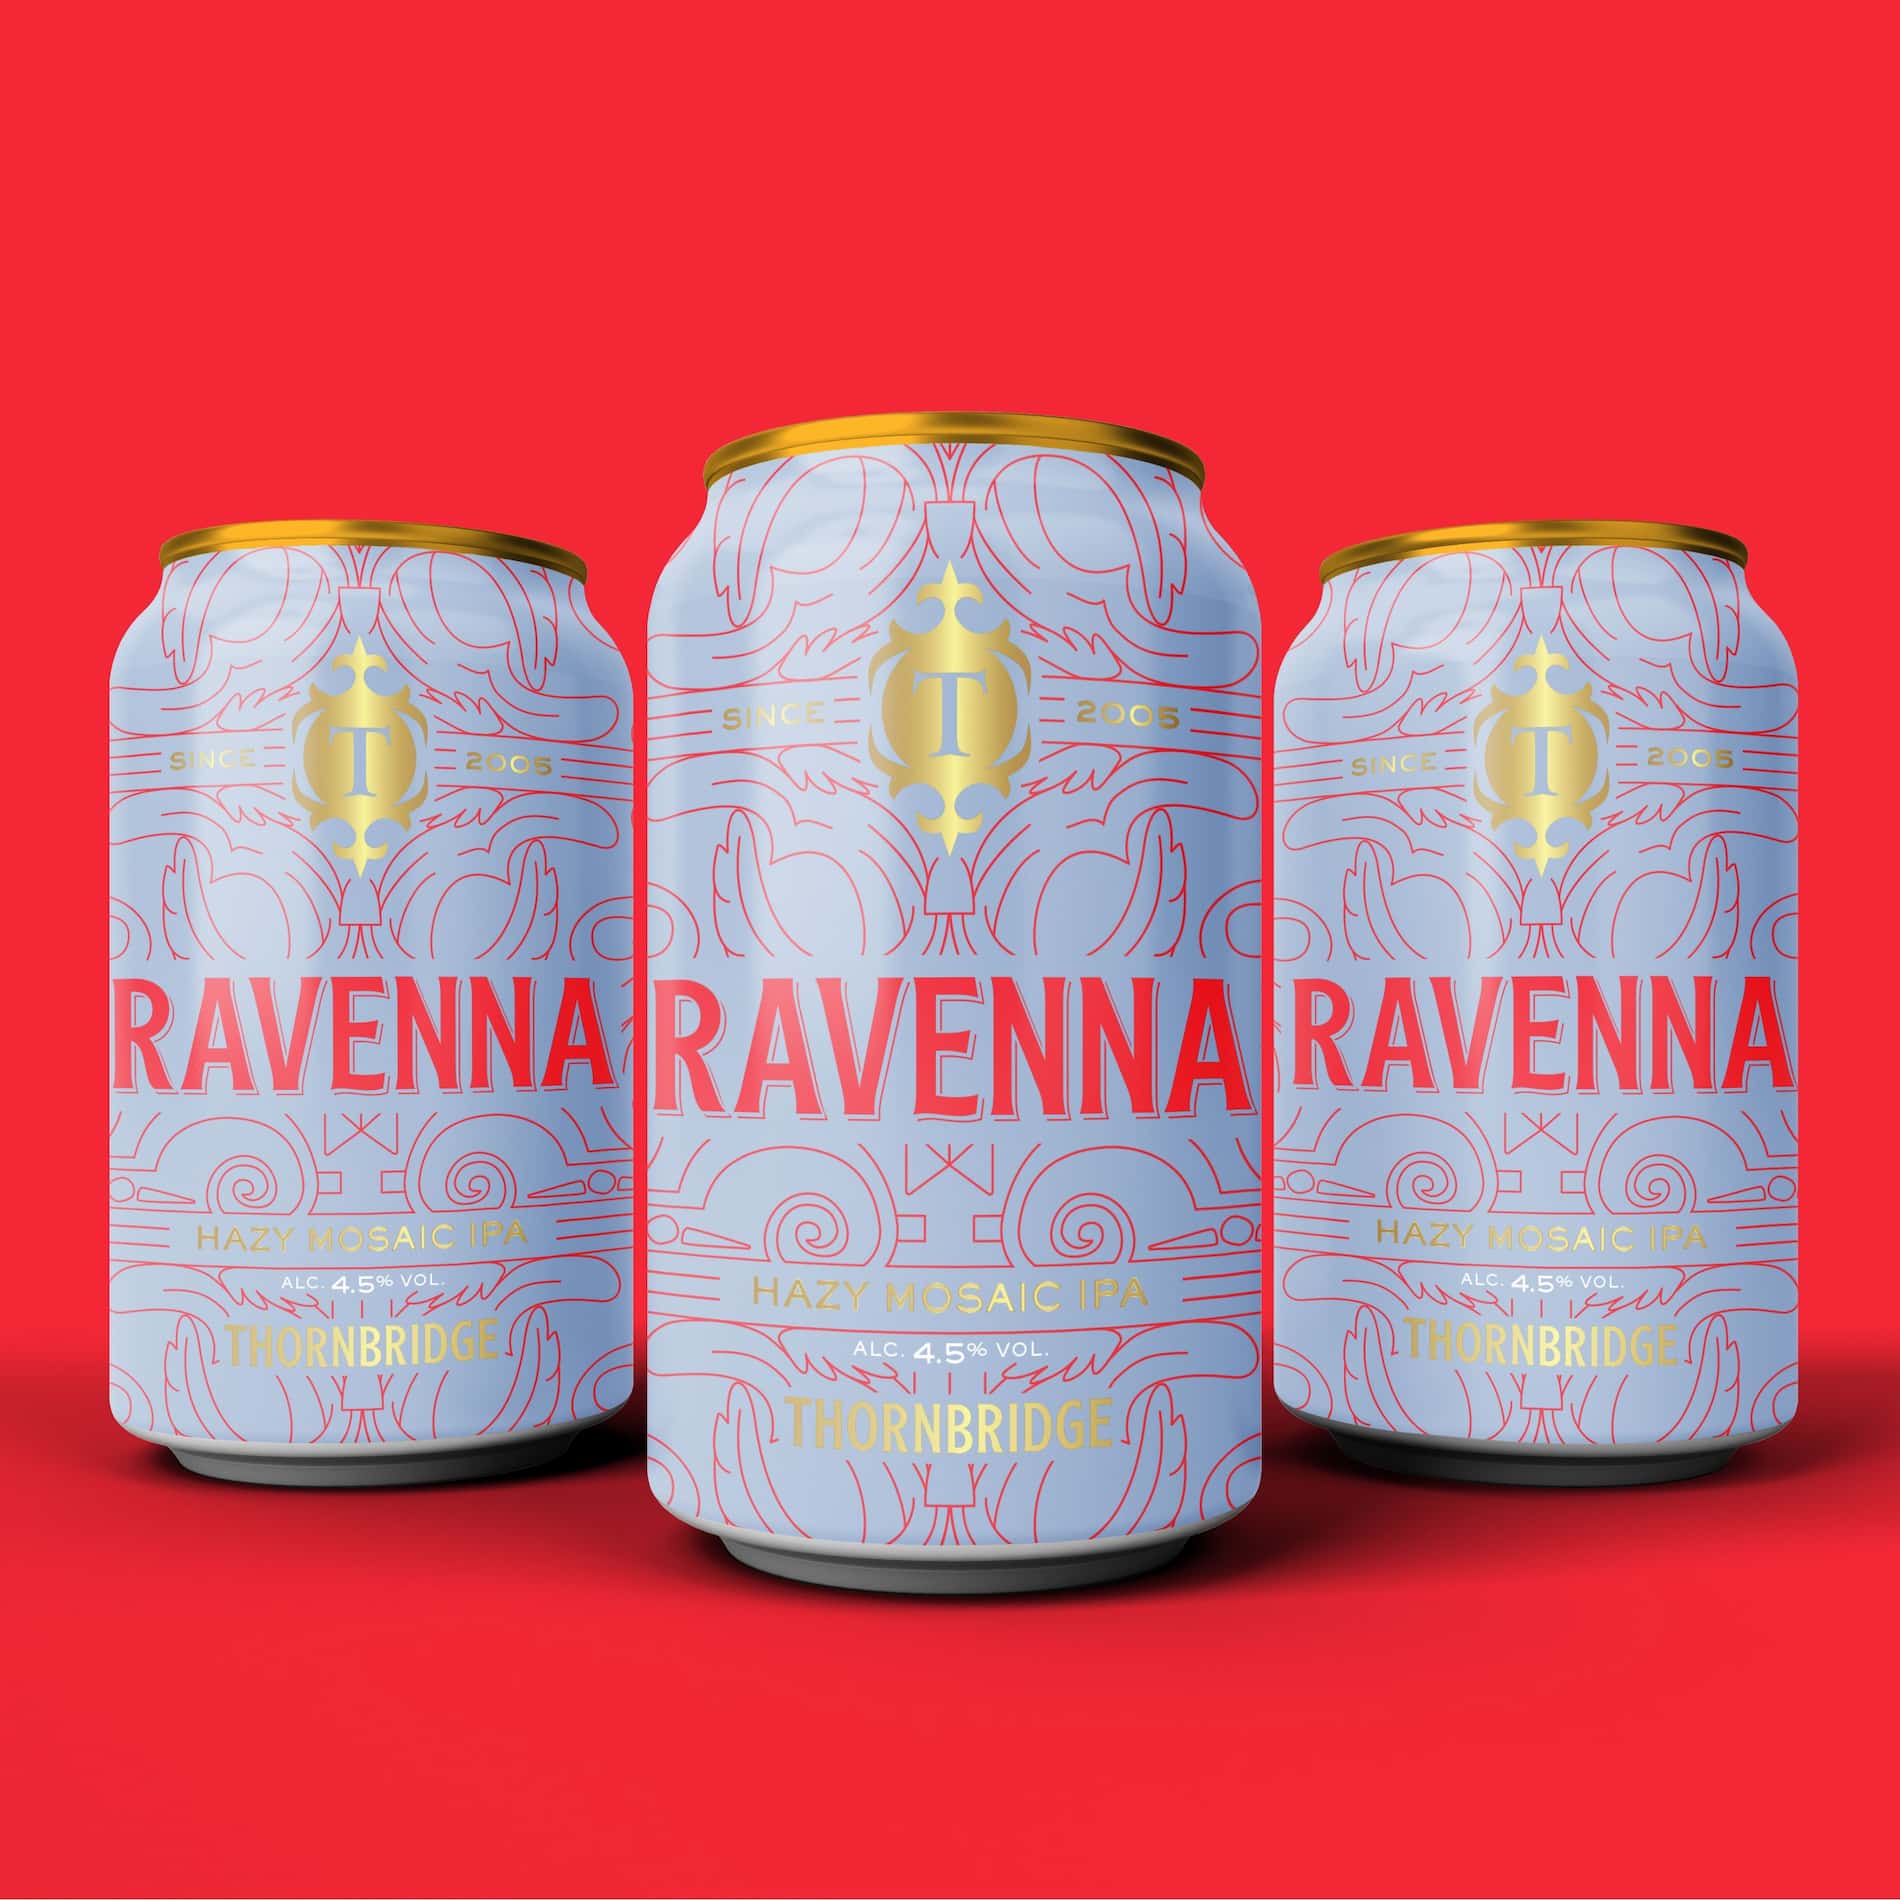 Ravenna, 4.5% Hazy Mosaic Pale Ale 12 x 330ml cans